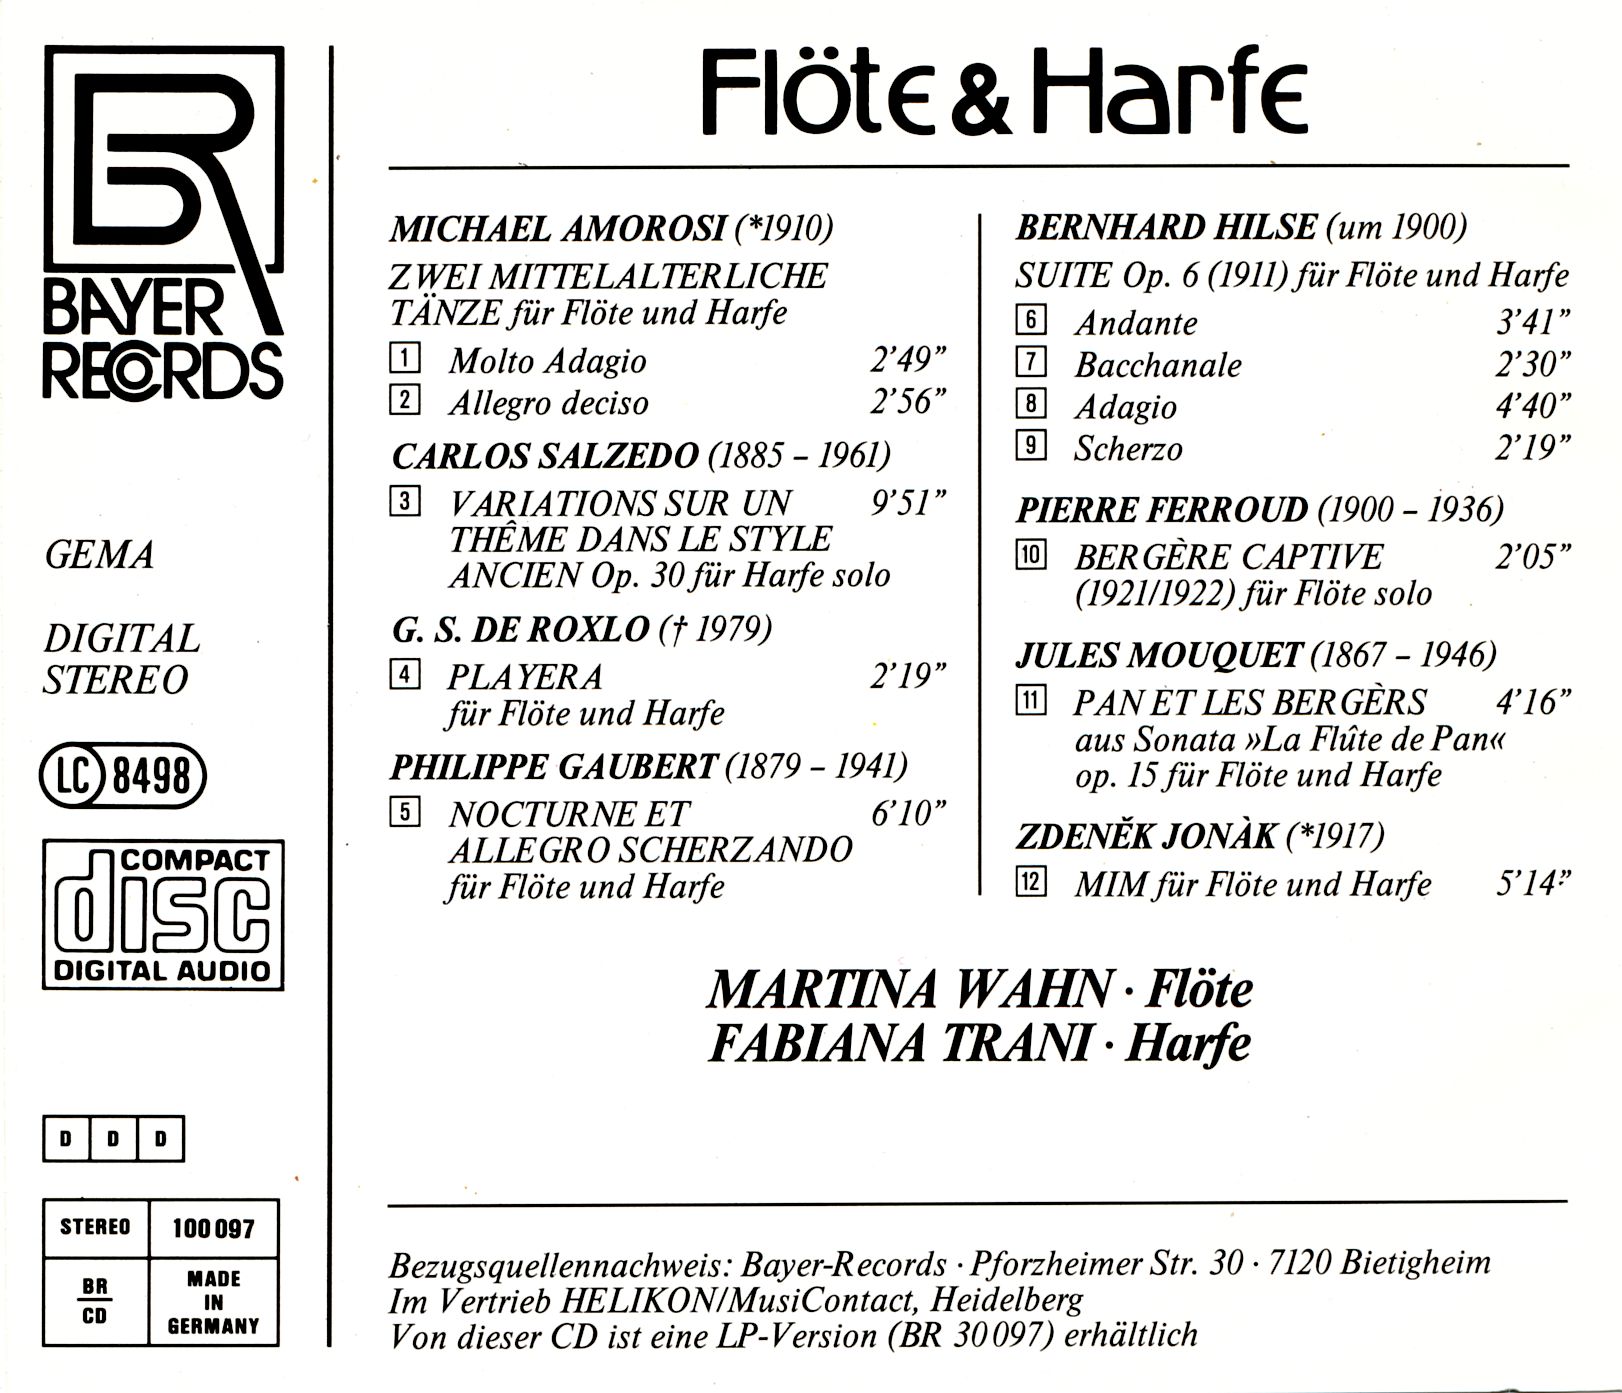 Flöte & Harfe